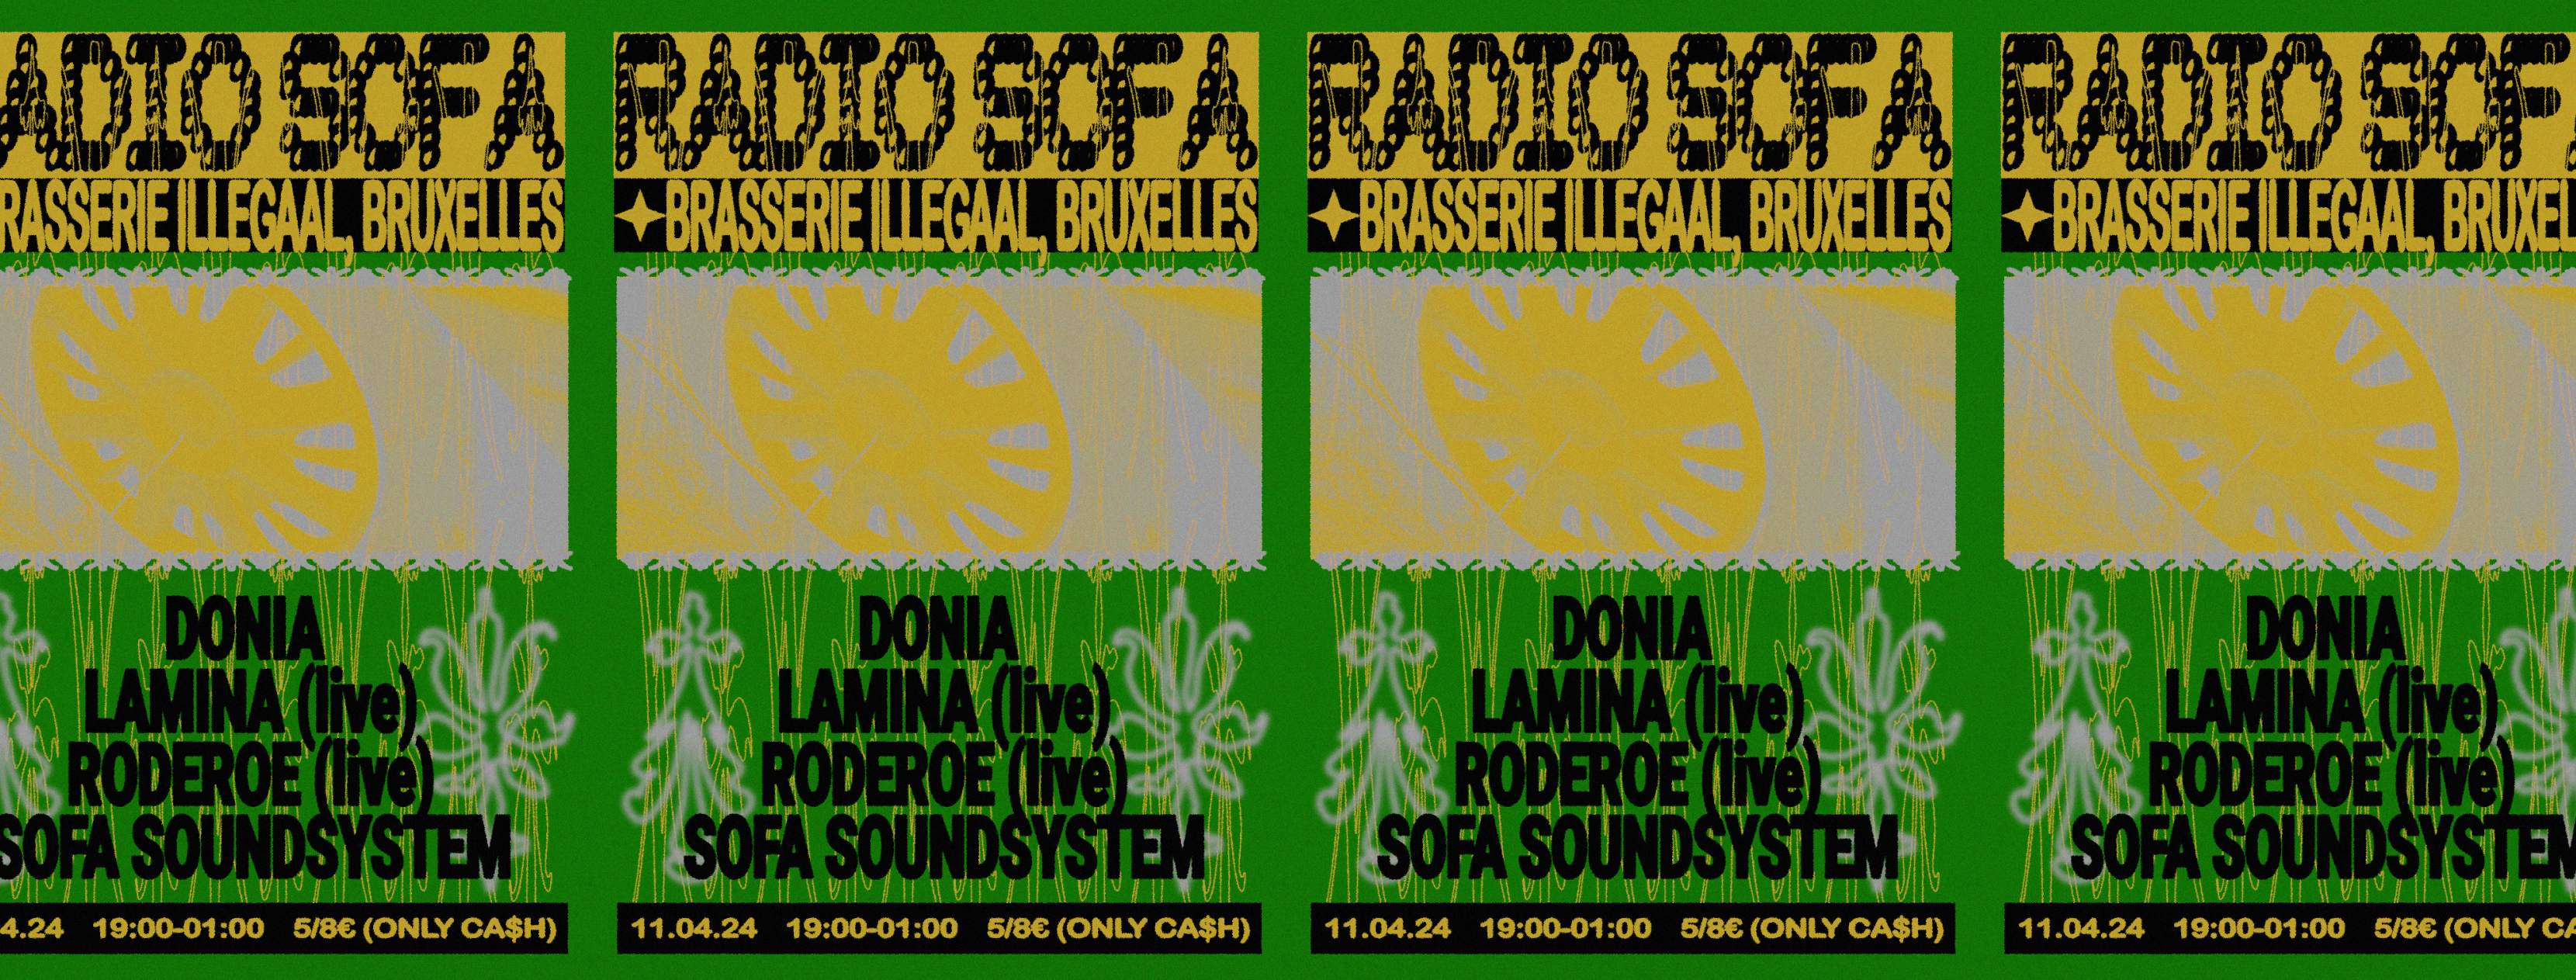 Radio Sofa x Brasserie Illegaal: DONIA, LAMINA (live), Roderoe (live), SOFA SOUNDSYSTEM - フライヤー表